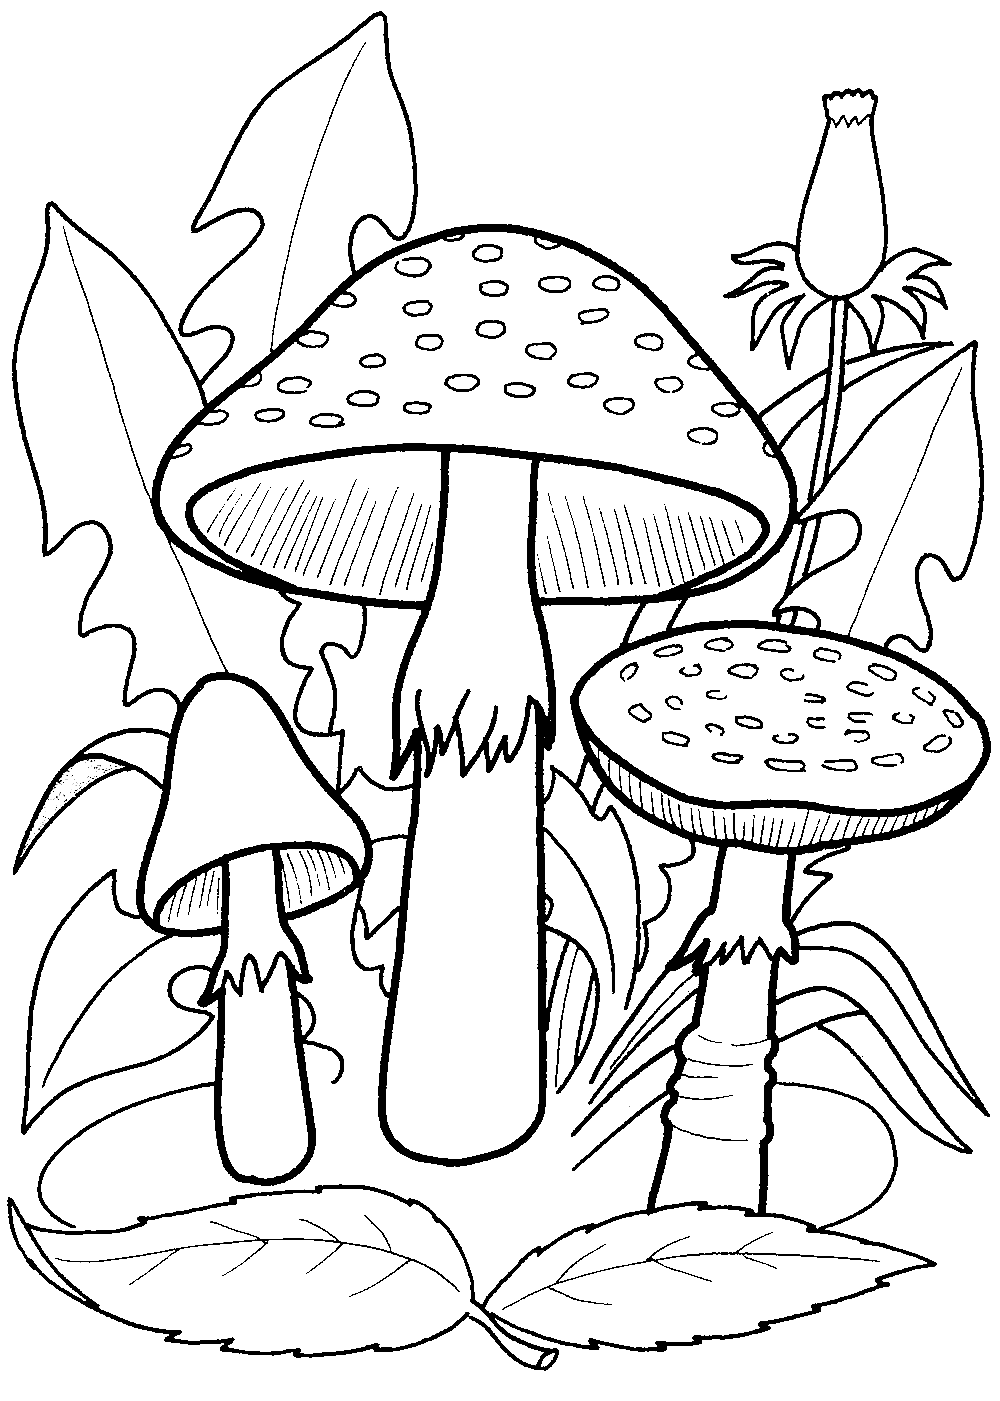 Drie prachtige paddenstoelen van Mushroom